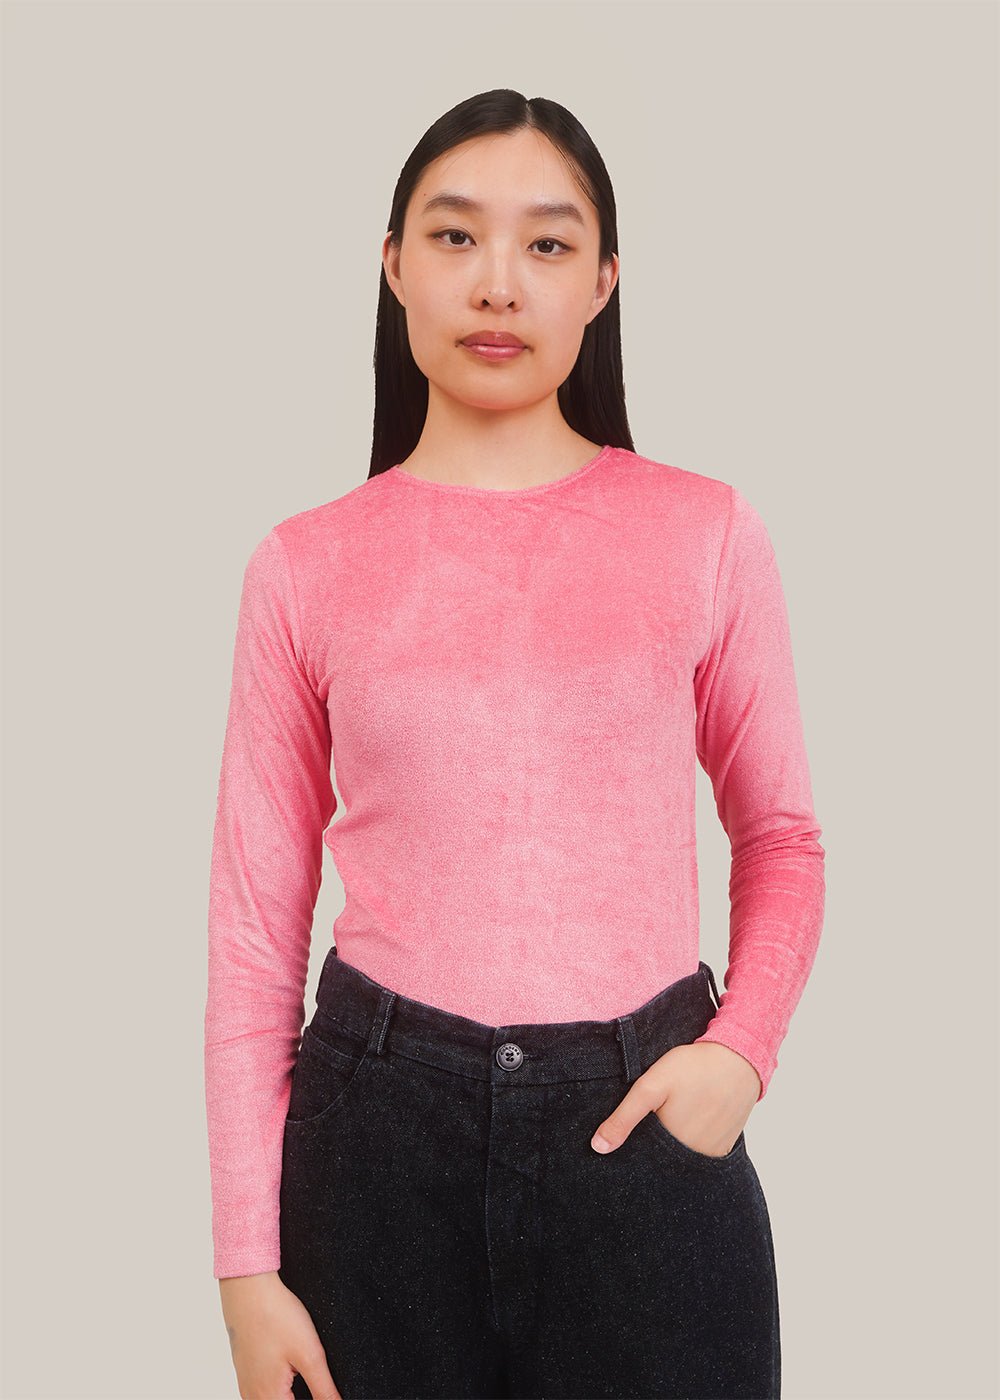 Omo Longsleeve Shirt in Zui Pink by BASERANGE – New Classics Studios